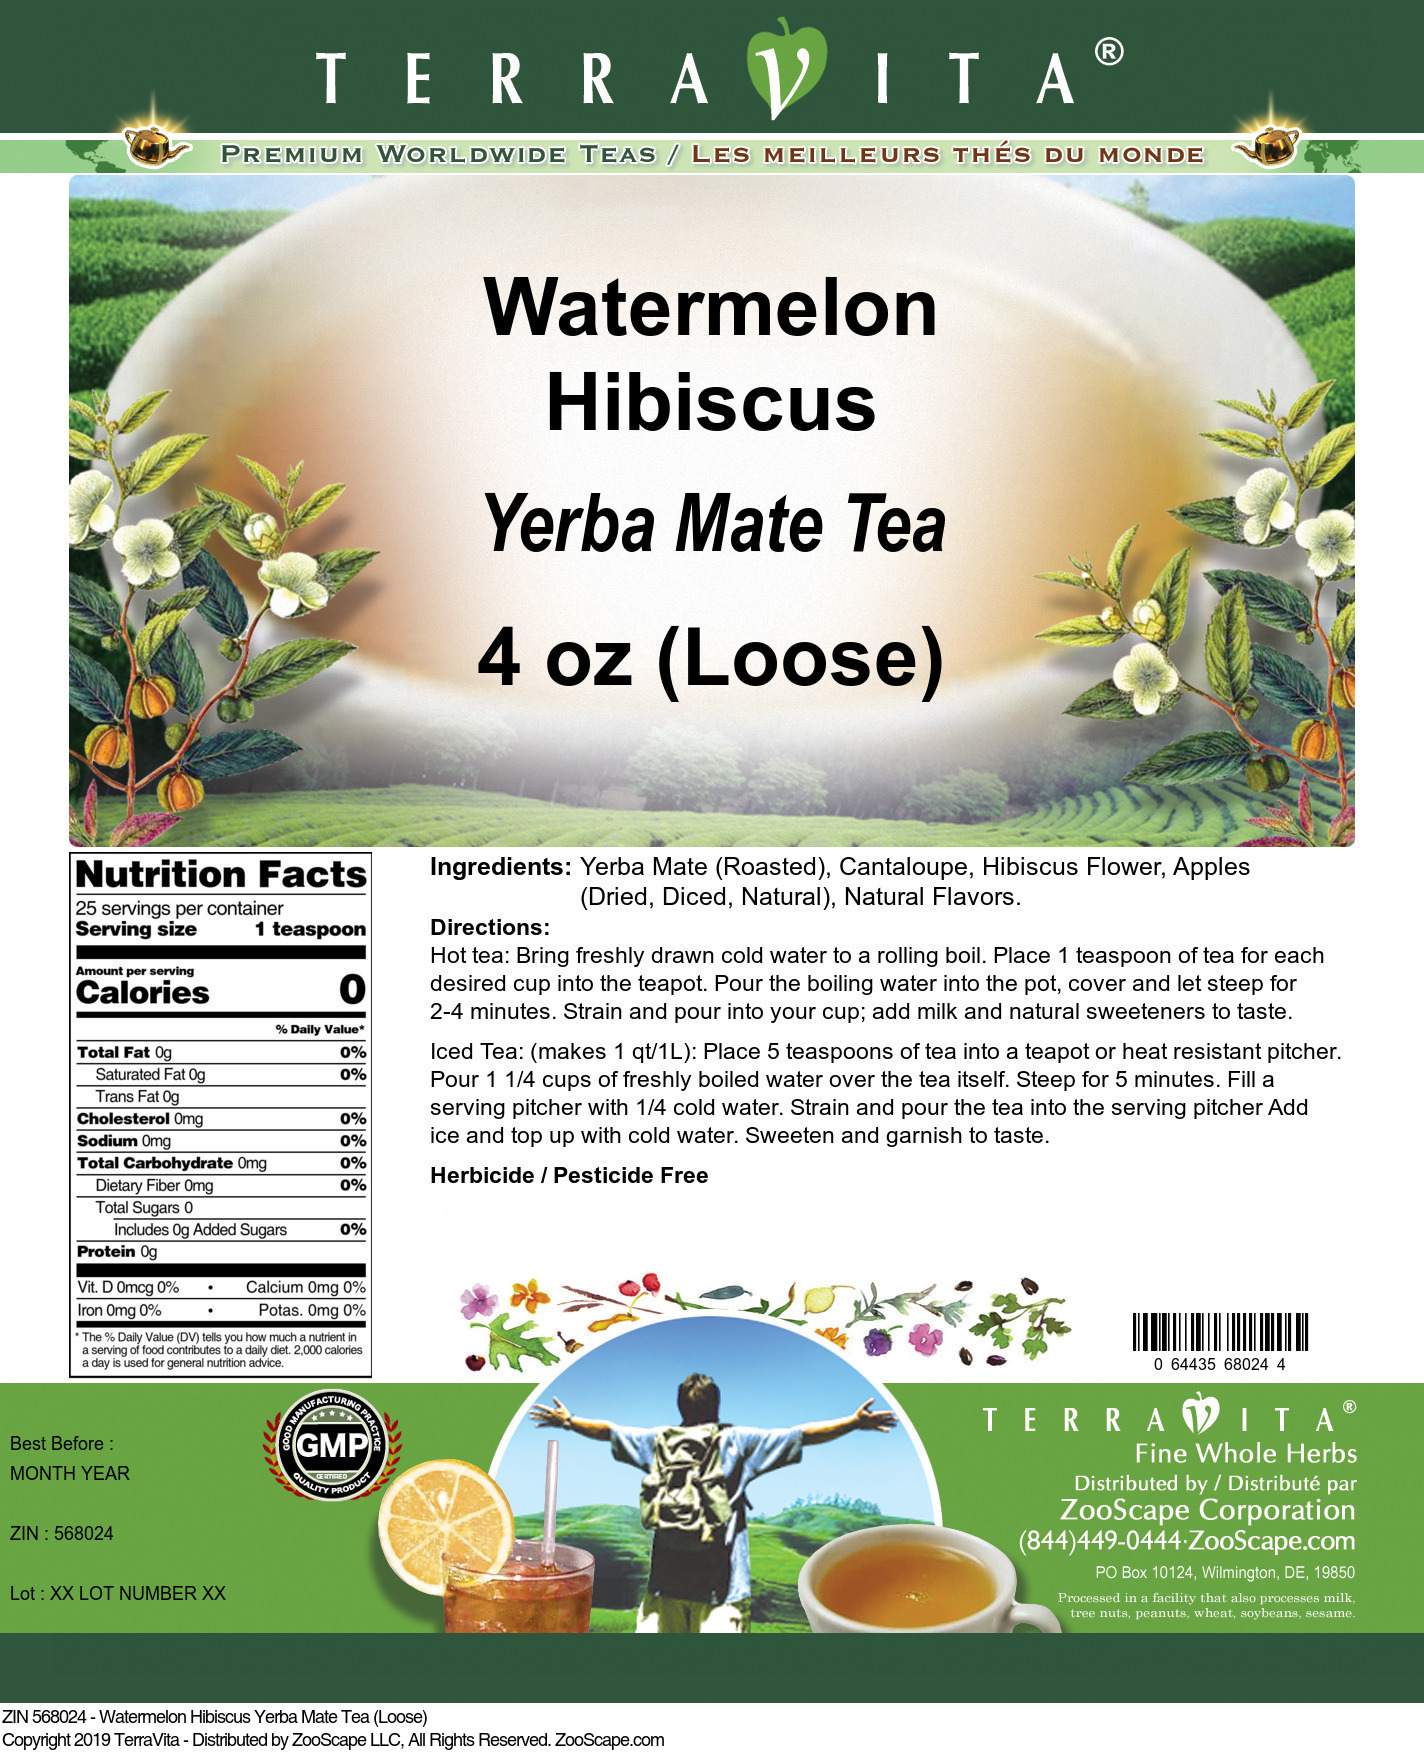 Watermelon Hibiscus Yerba Mate Tea (Loose) - Label